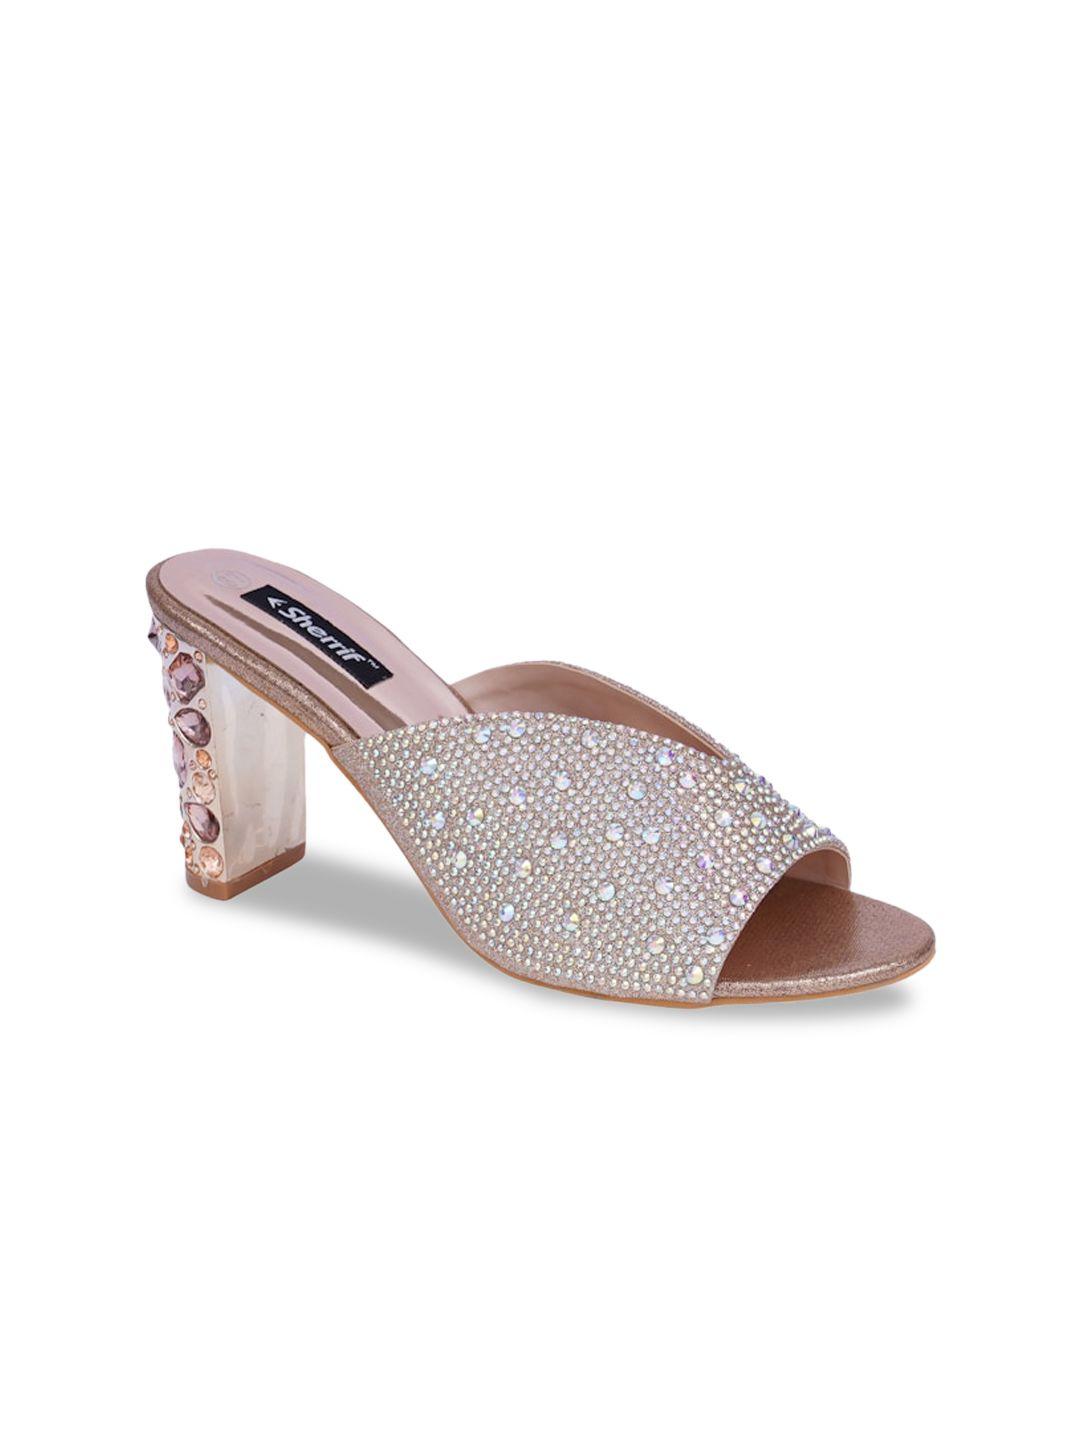 sherrif shoes women silver-toned & pink embellished block heels